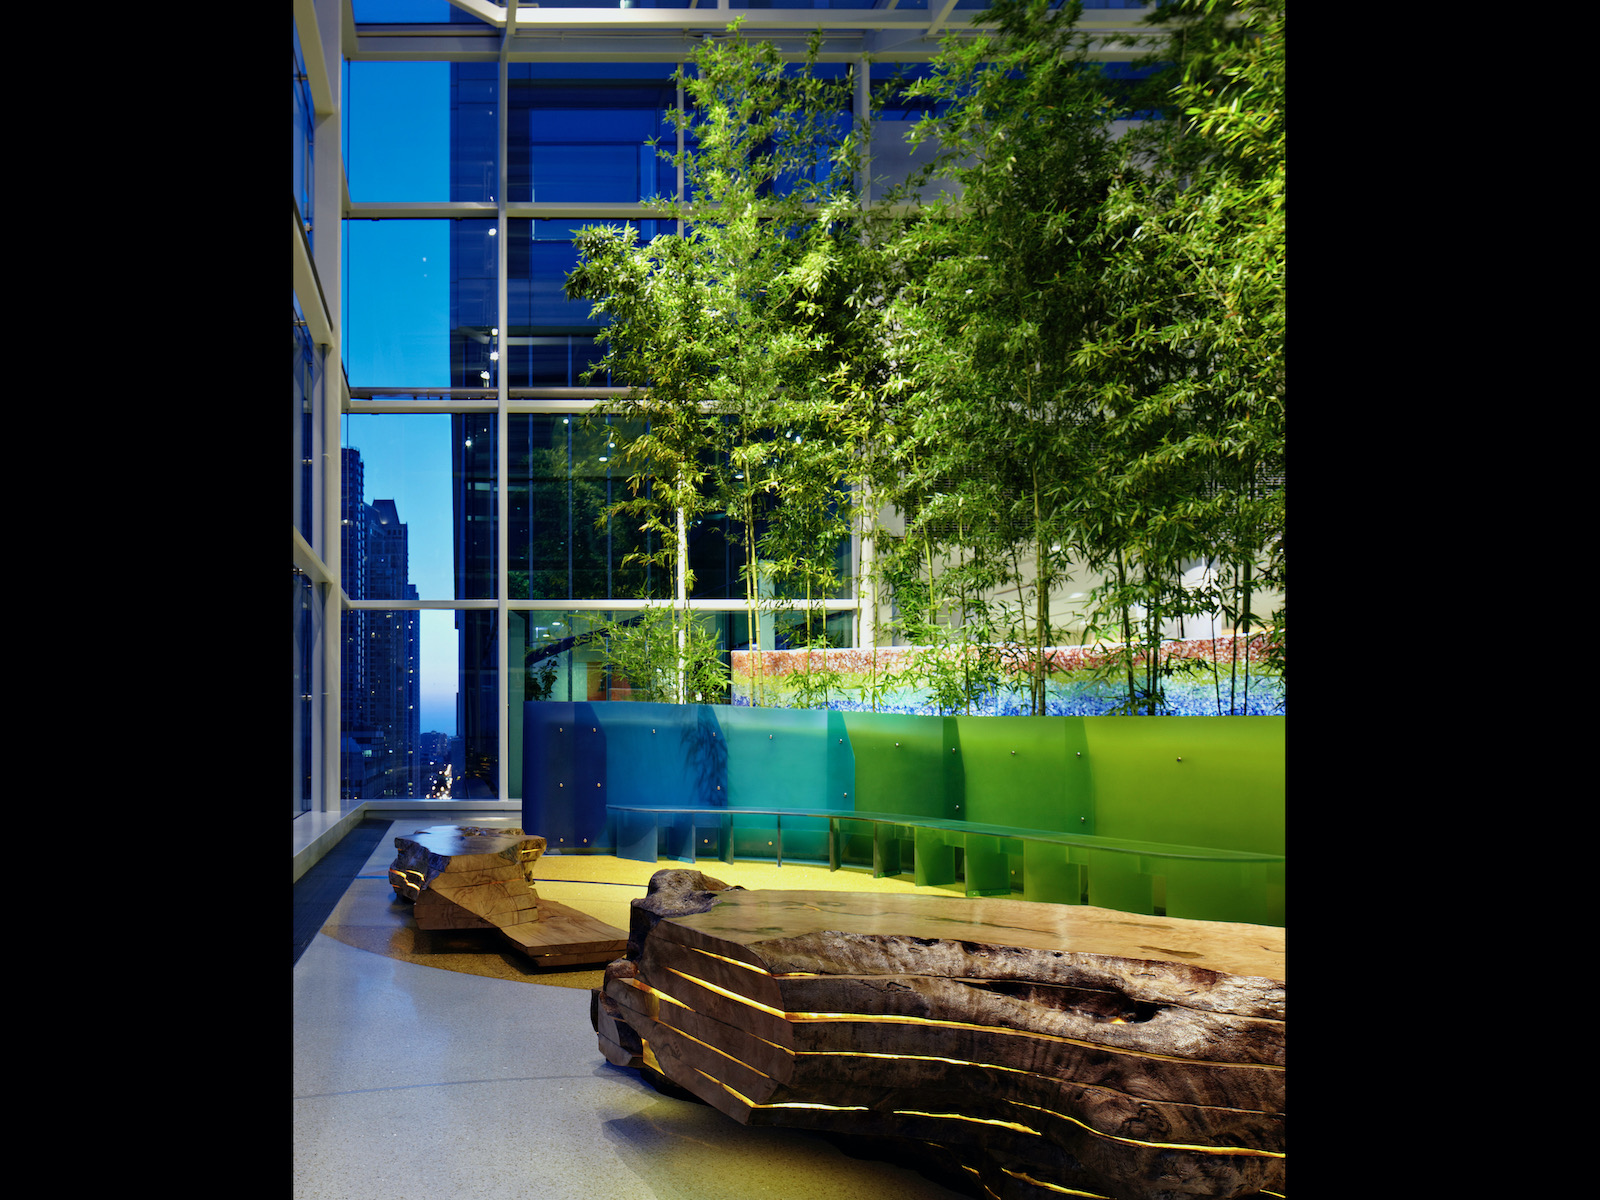 Chicago Childrens Hospital FRP Panels for Colorful Sky Garden - Ctek engineering, fabrication